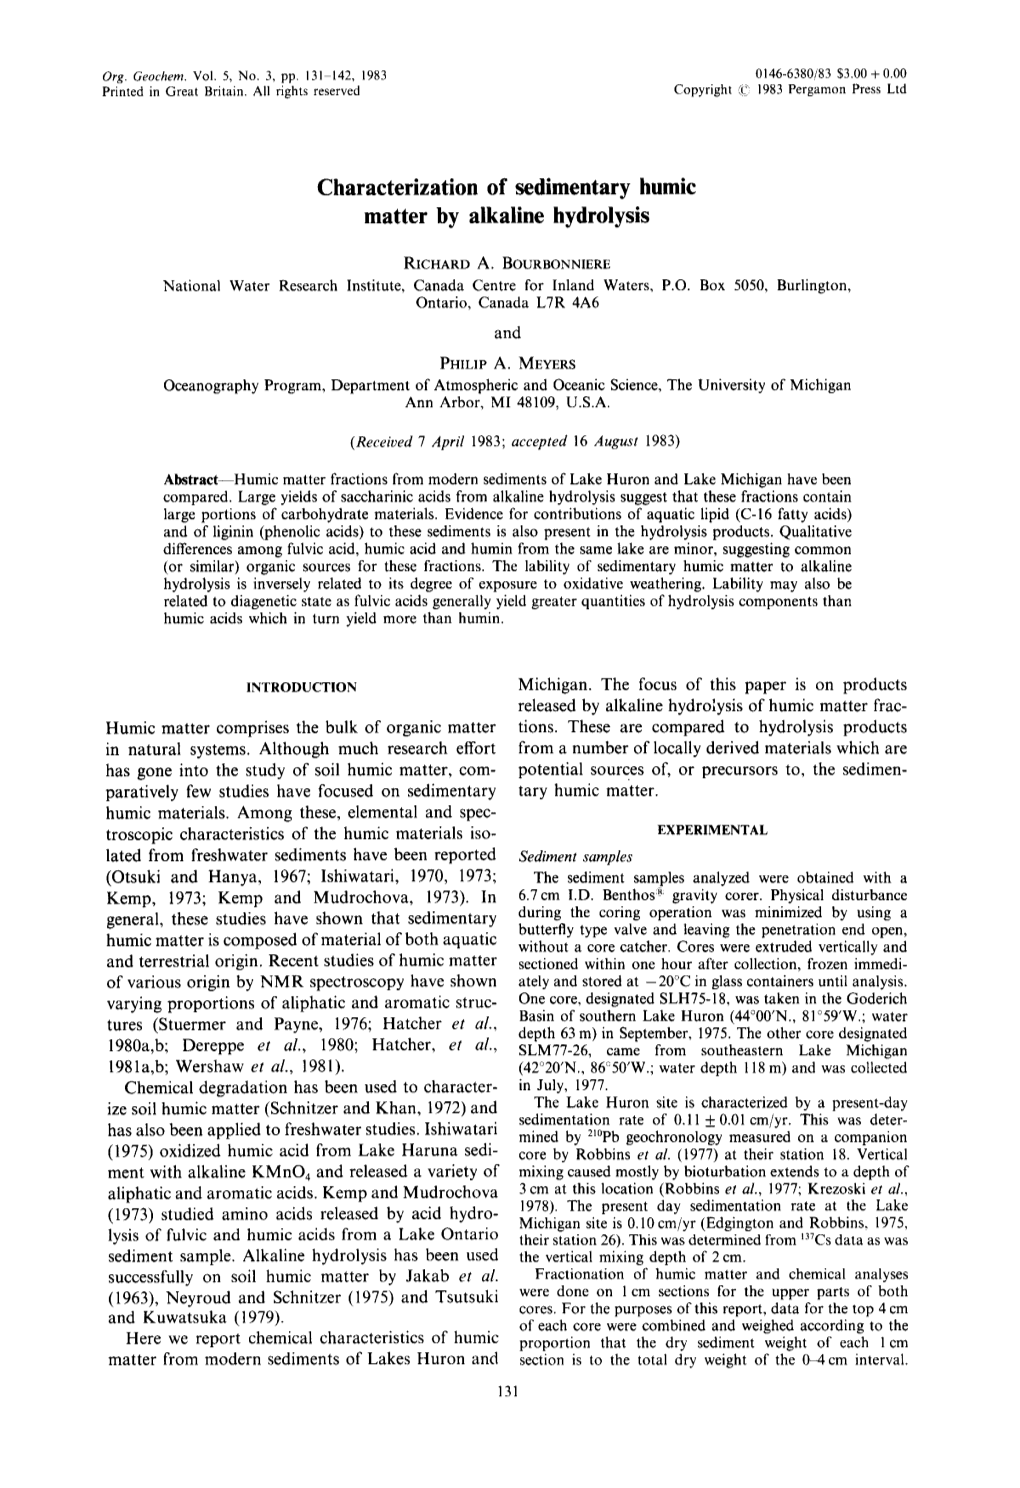 Characterization of Sedimentary Humic Matter by Alkaline Hydrolysis